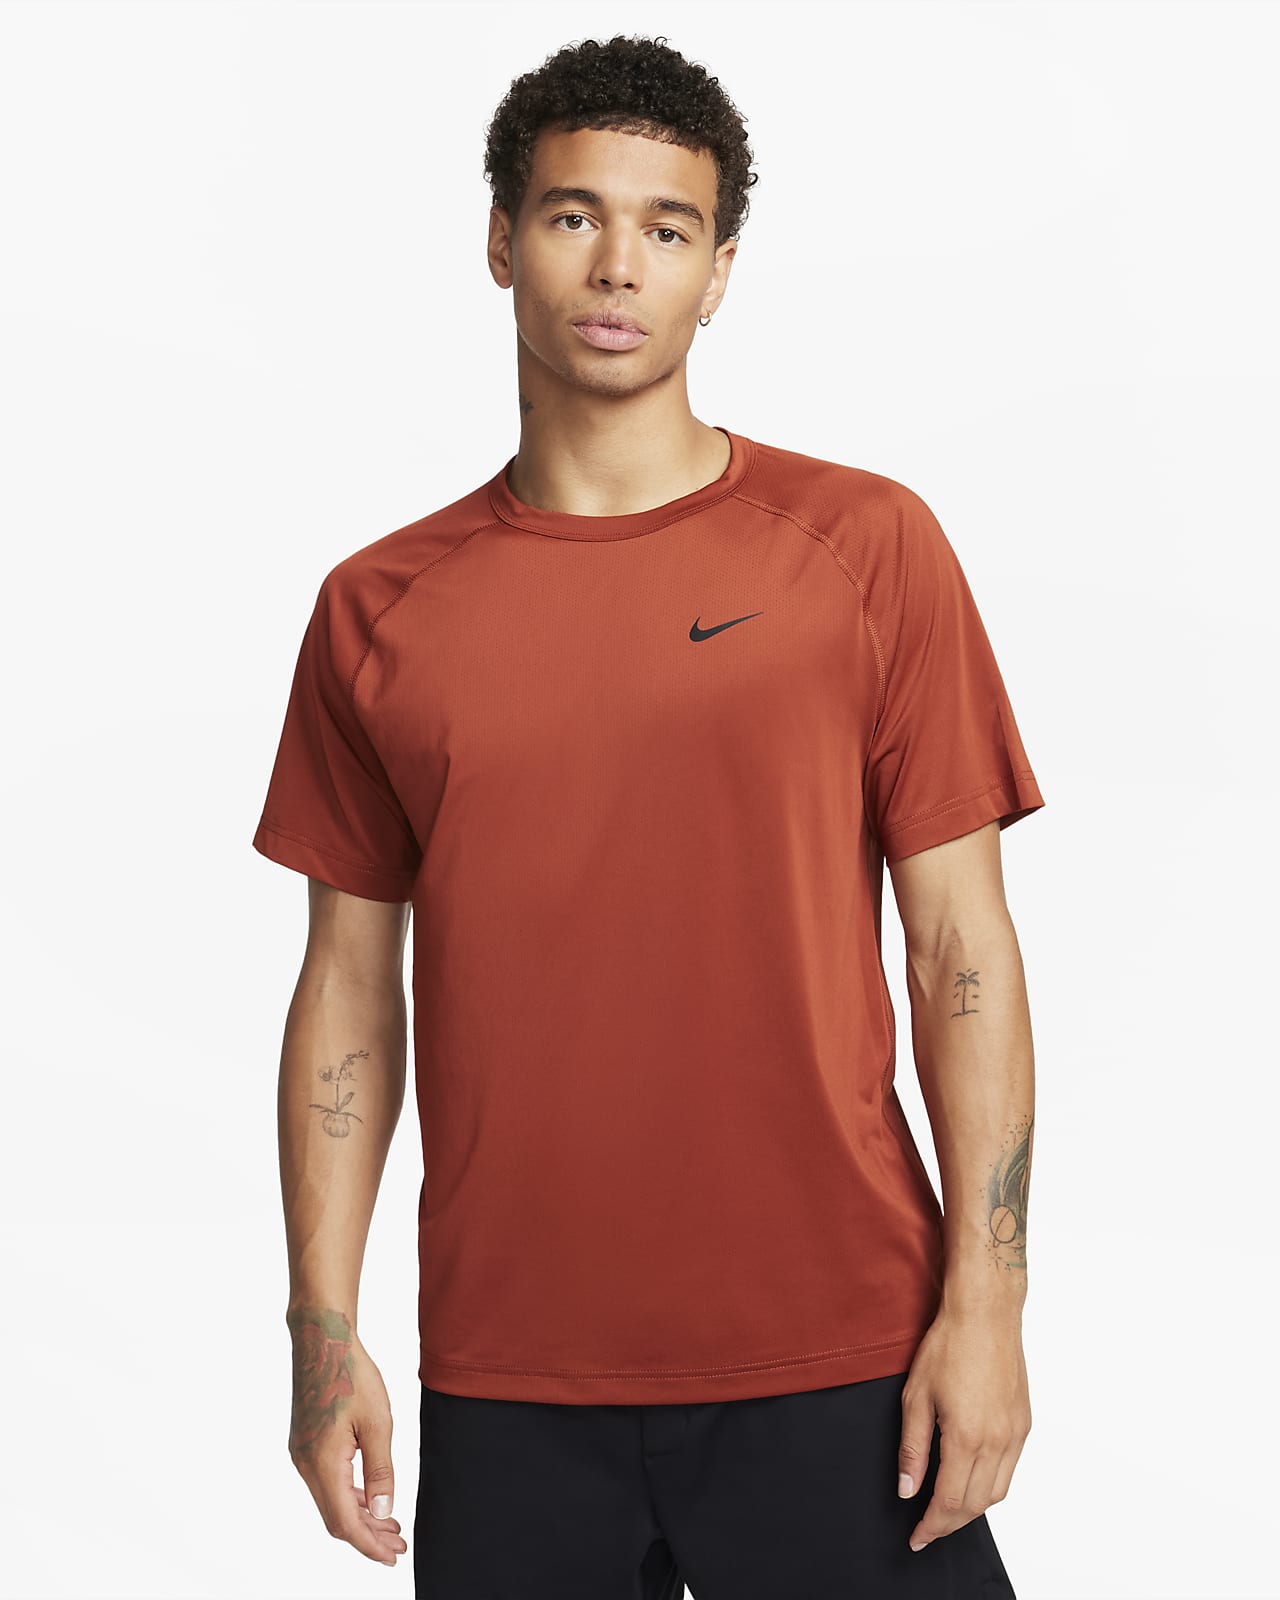 Men's Dri-FIT Short-Sleeve Fitness Top. Nike.com